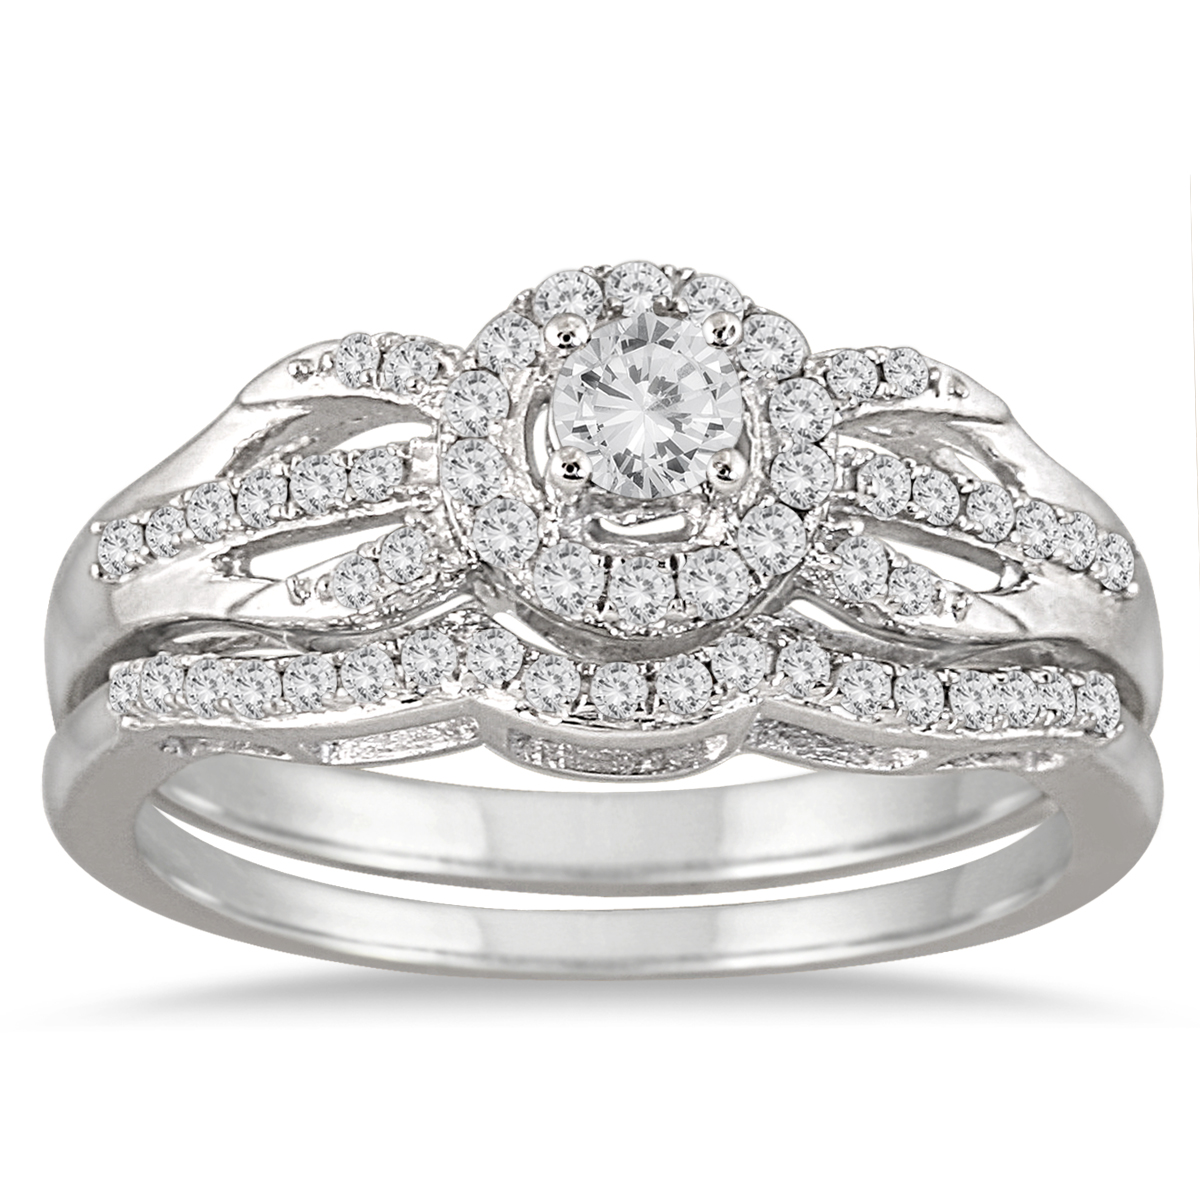 1/2 Carat TW Antique Diamond Bridal Set in 10K White Gold (K-L Color, I2-I3 Clarity)